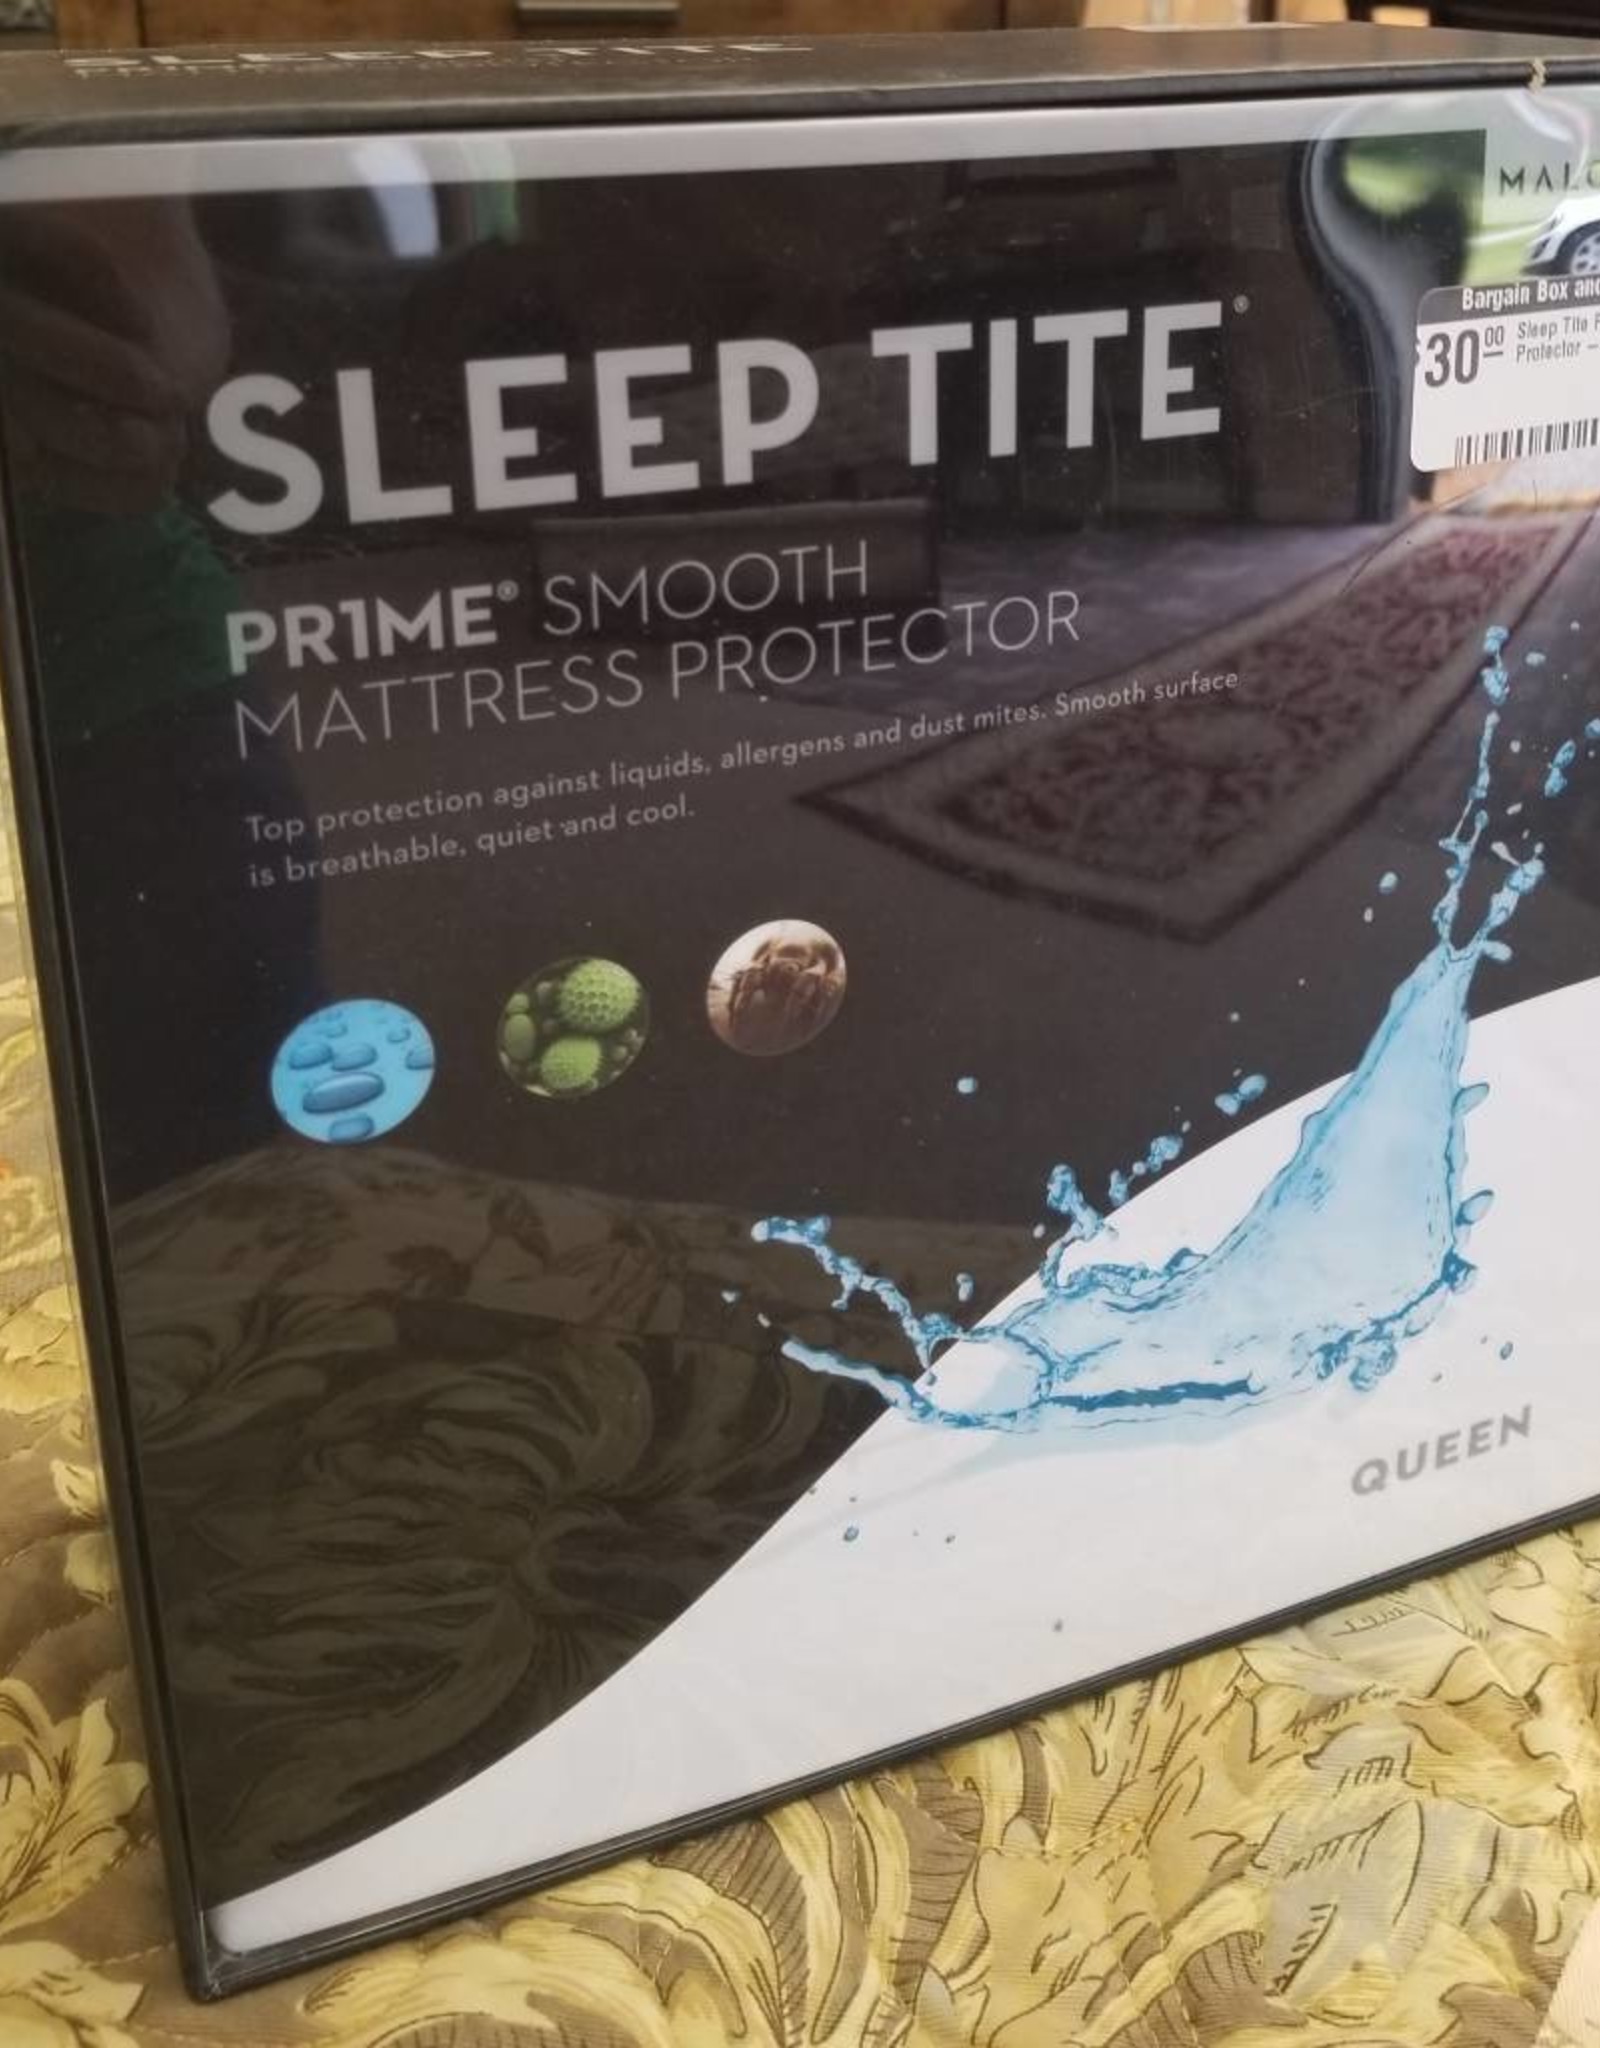 Malouf Sleep Tite Pr!me Smooth Protector - Queen Size Mattress Pad